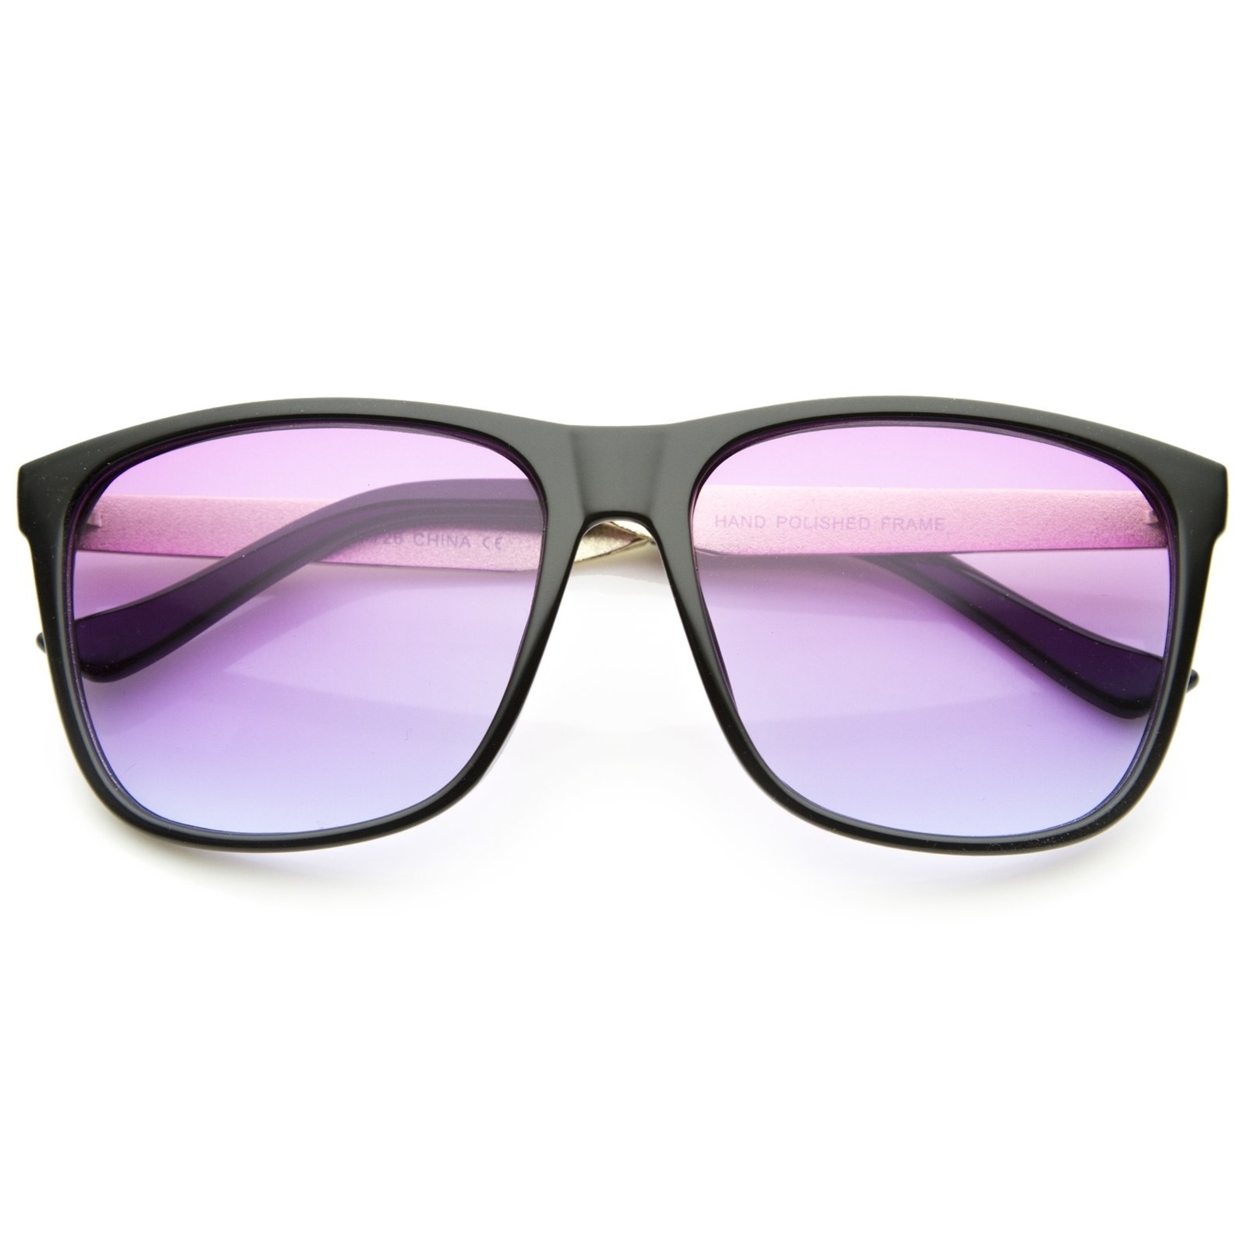 Modern Horn Rimmed Gradient Colored Lens Metal Temple Square Sunglasses 56mm - Black / Blue